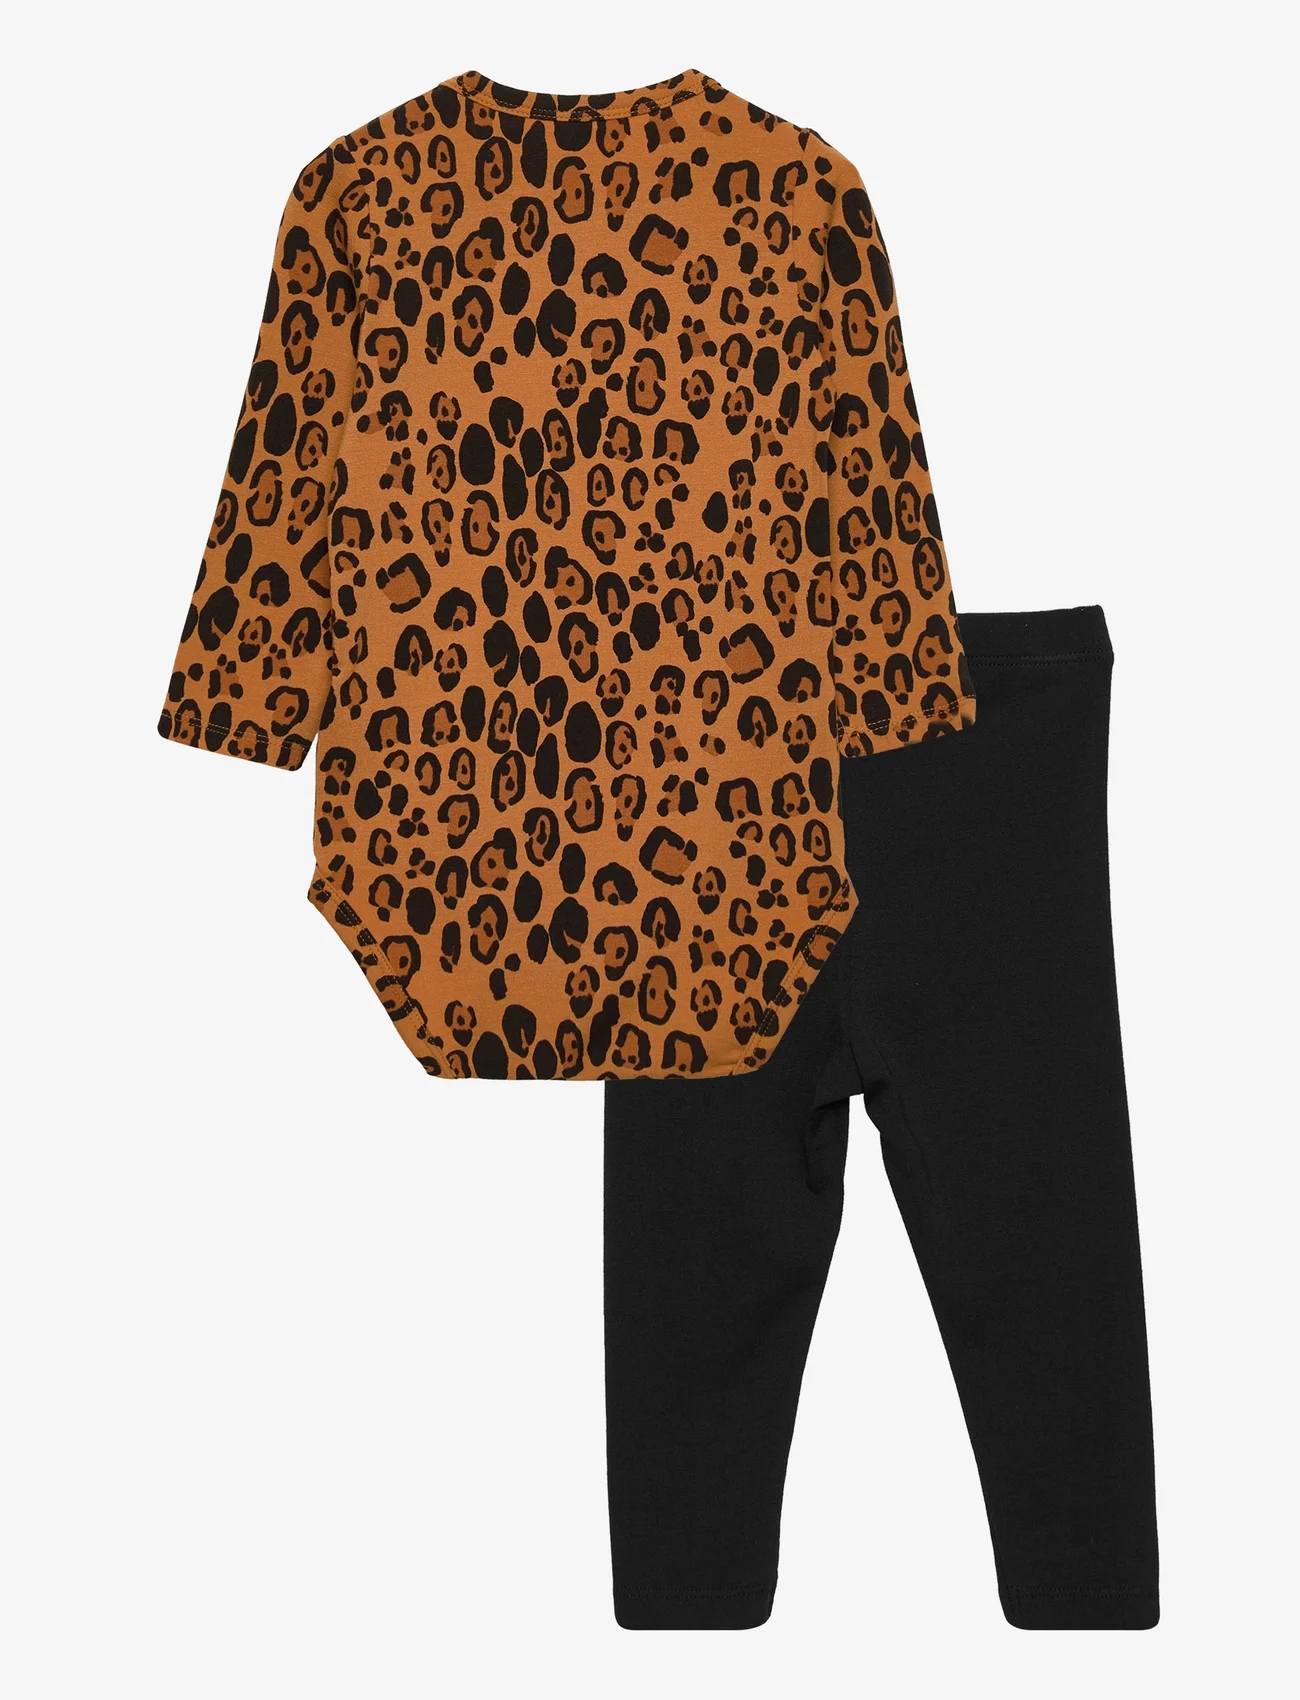 Mini Rodini - Basic leopard ls body + leggings - sets mit body - multi - 1